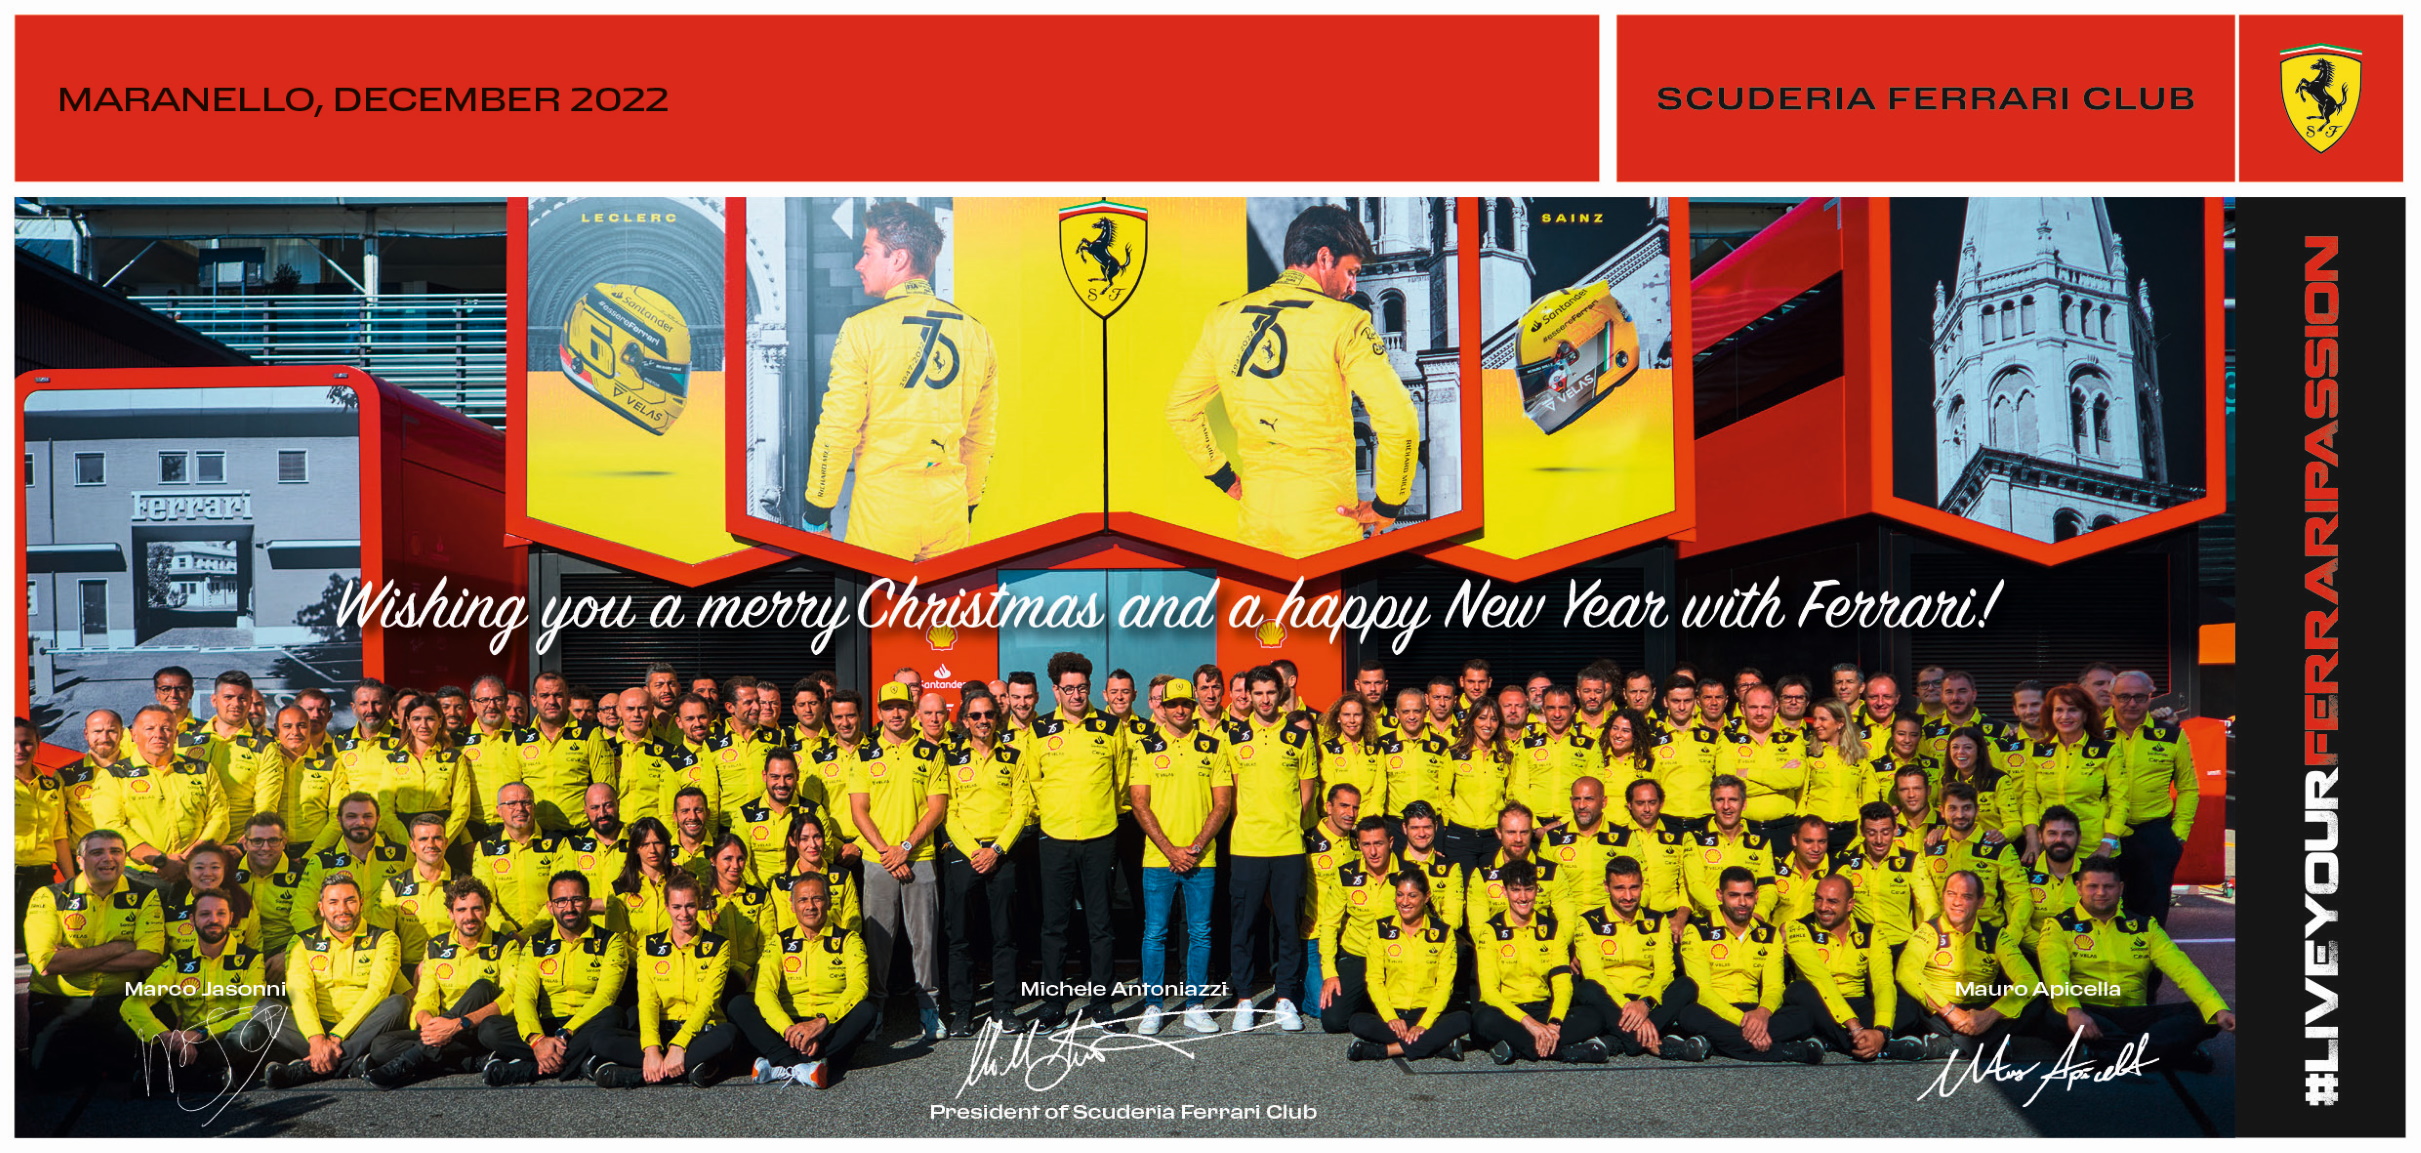 Christmas 2022 – Scuderia Ferrari Club wishes Ferrari FANS